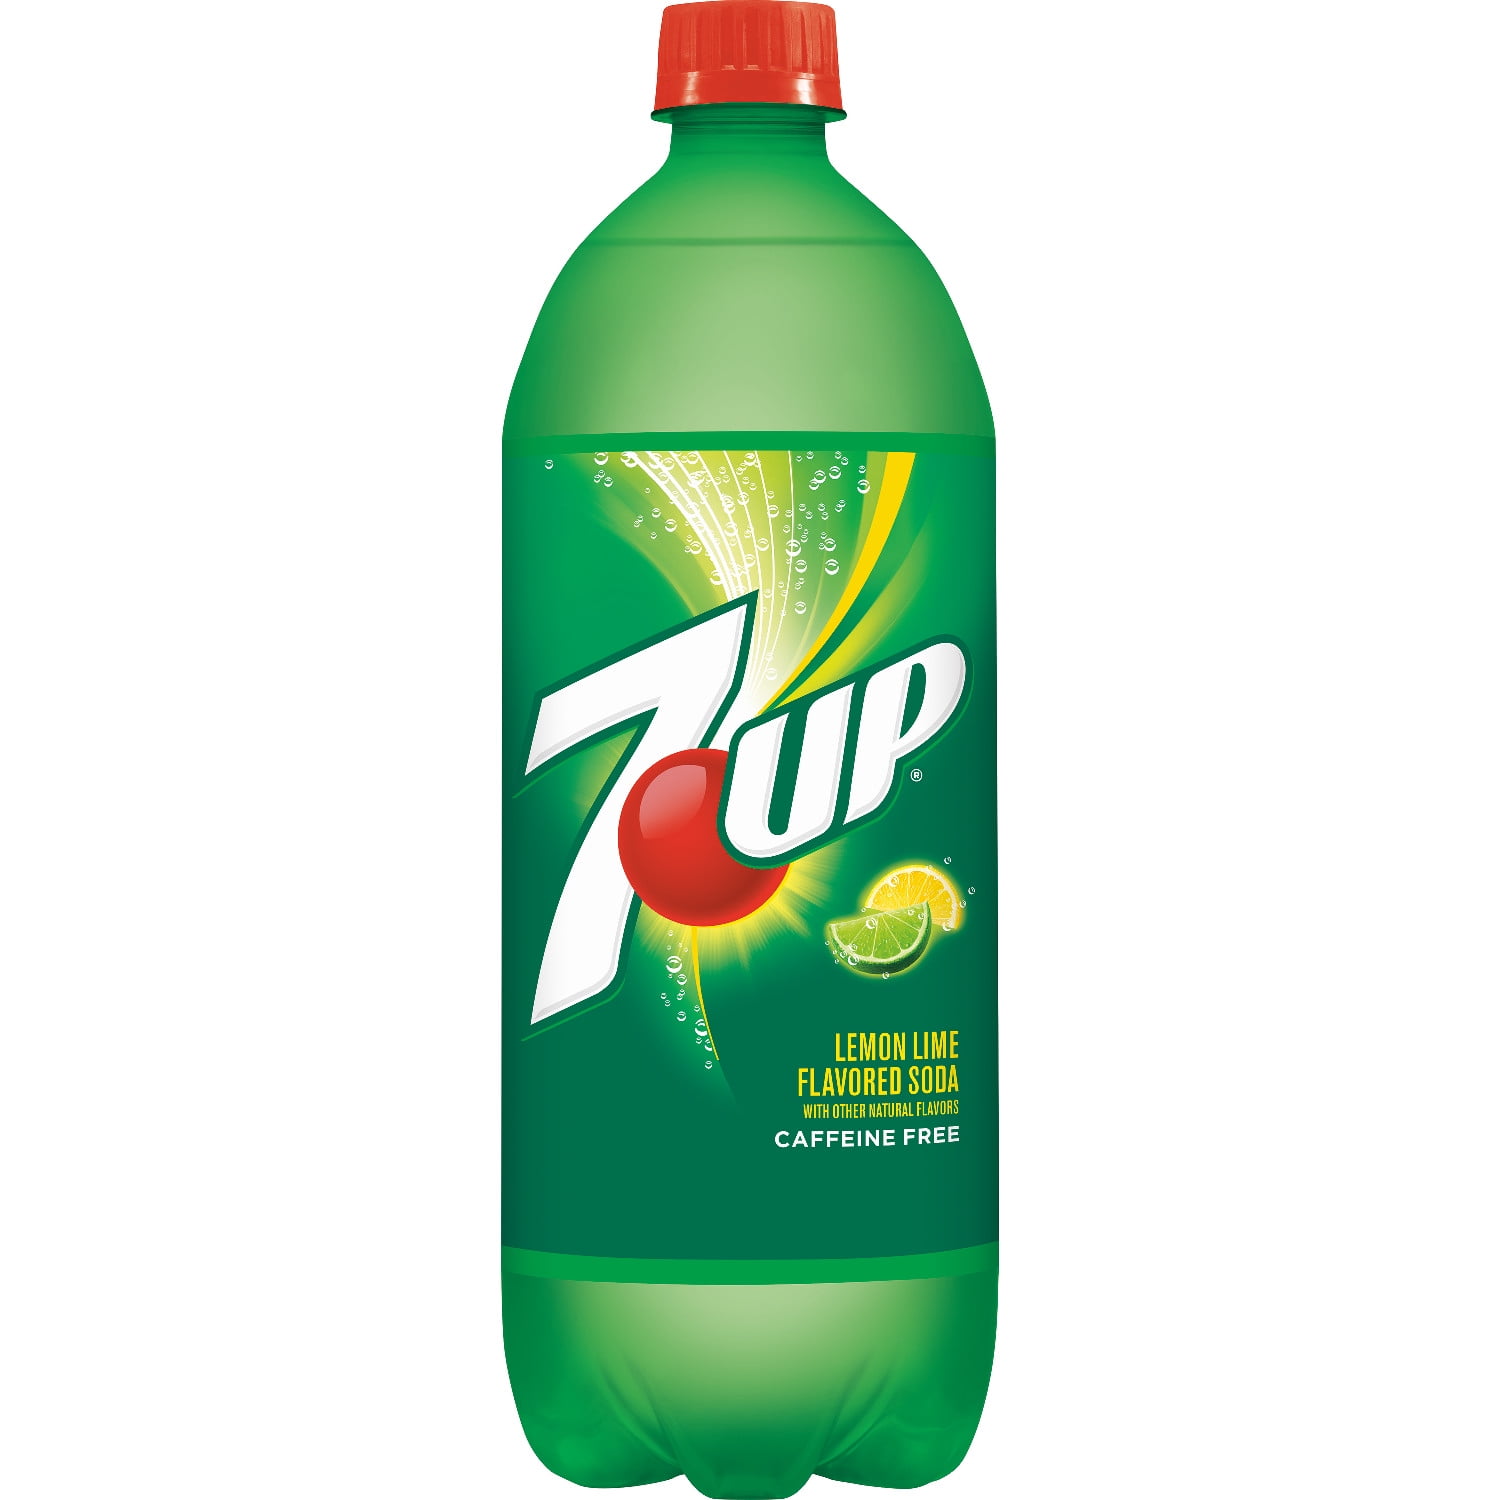 Buy 7UP Lemon Lime Soda, 1 L bottle Online at Lowest Price in Ubuy ...